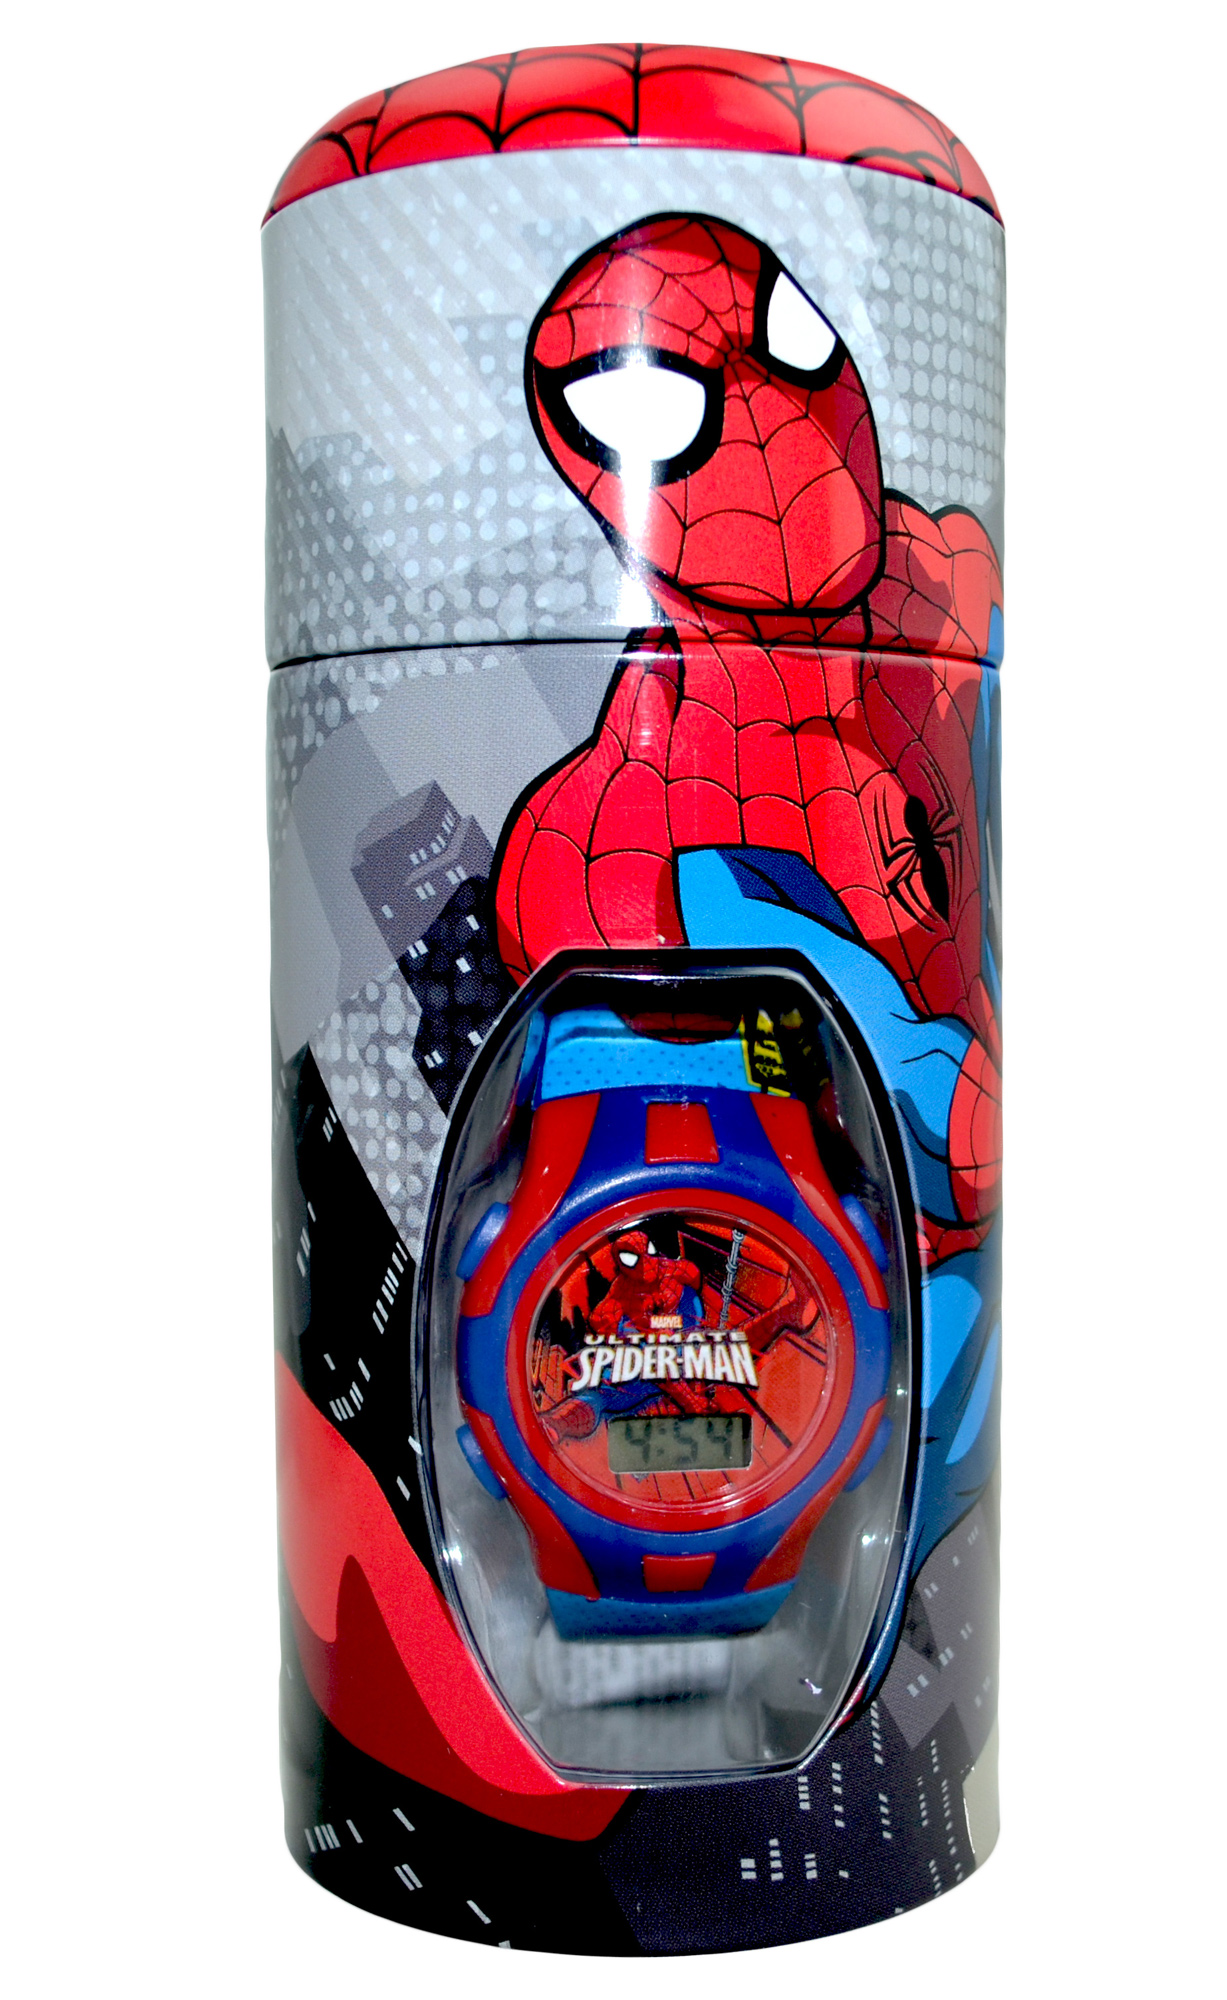 Spiderman 'Action' Boys Digital Metal Tin Gift Wrist Watch